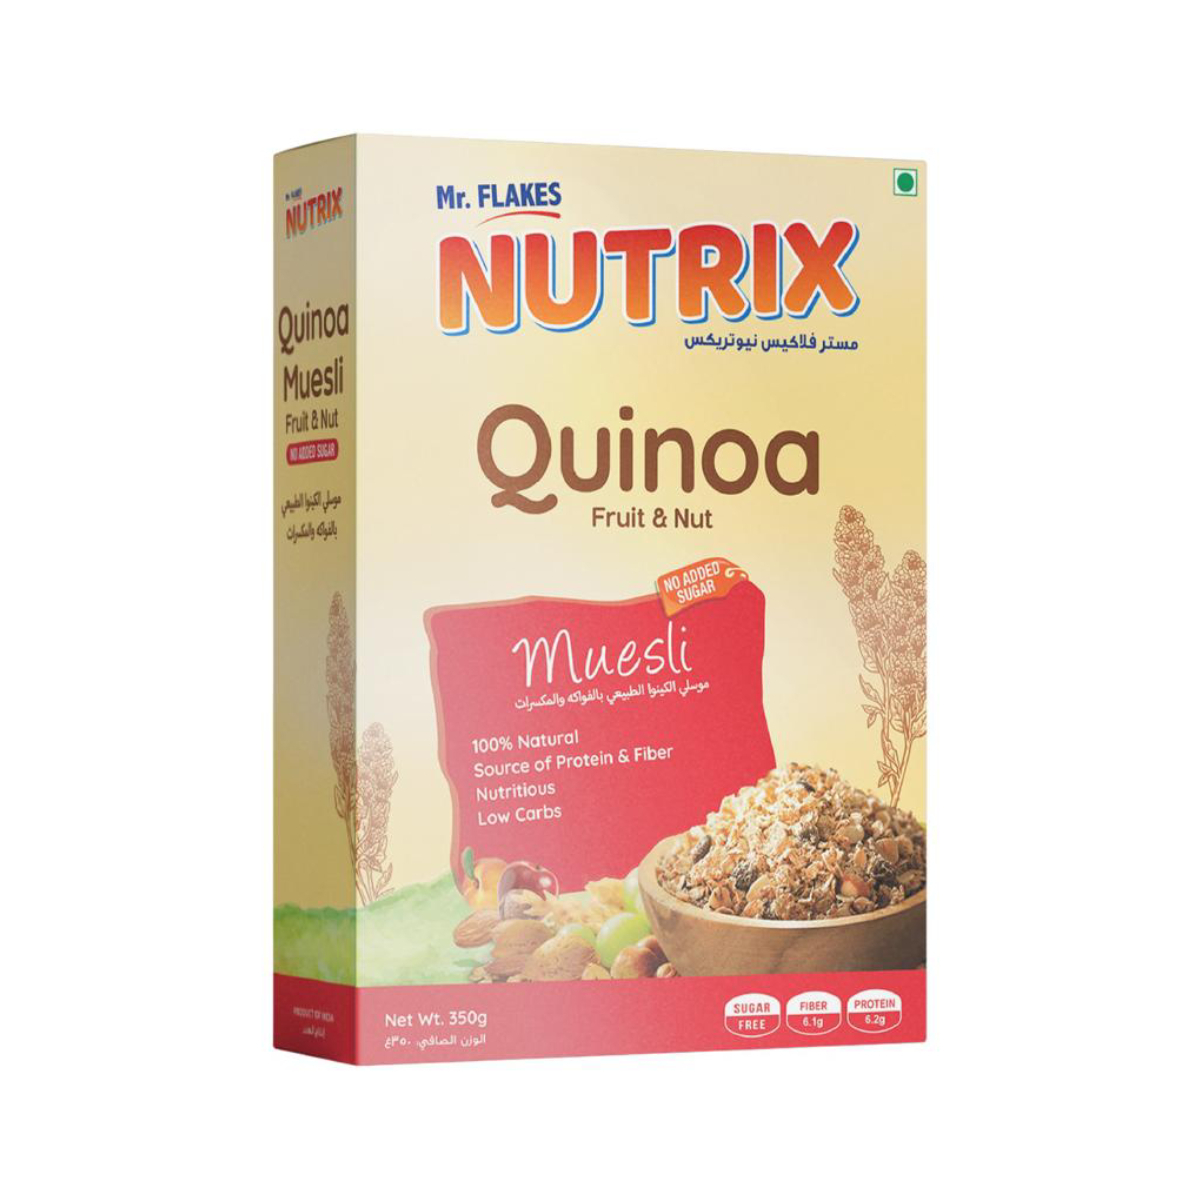 Mr. Flakes Nutrix Quinoa Fruit & Nut Muesli Sugar Free 350 g